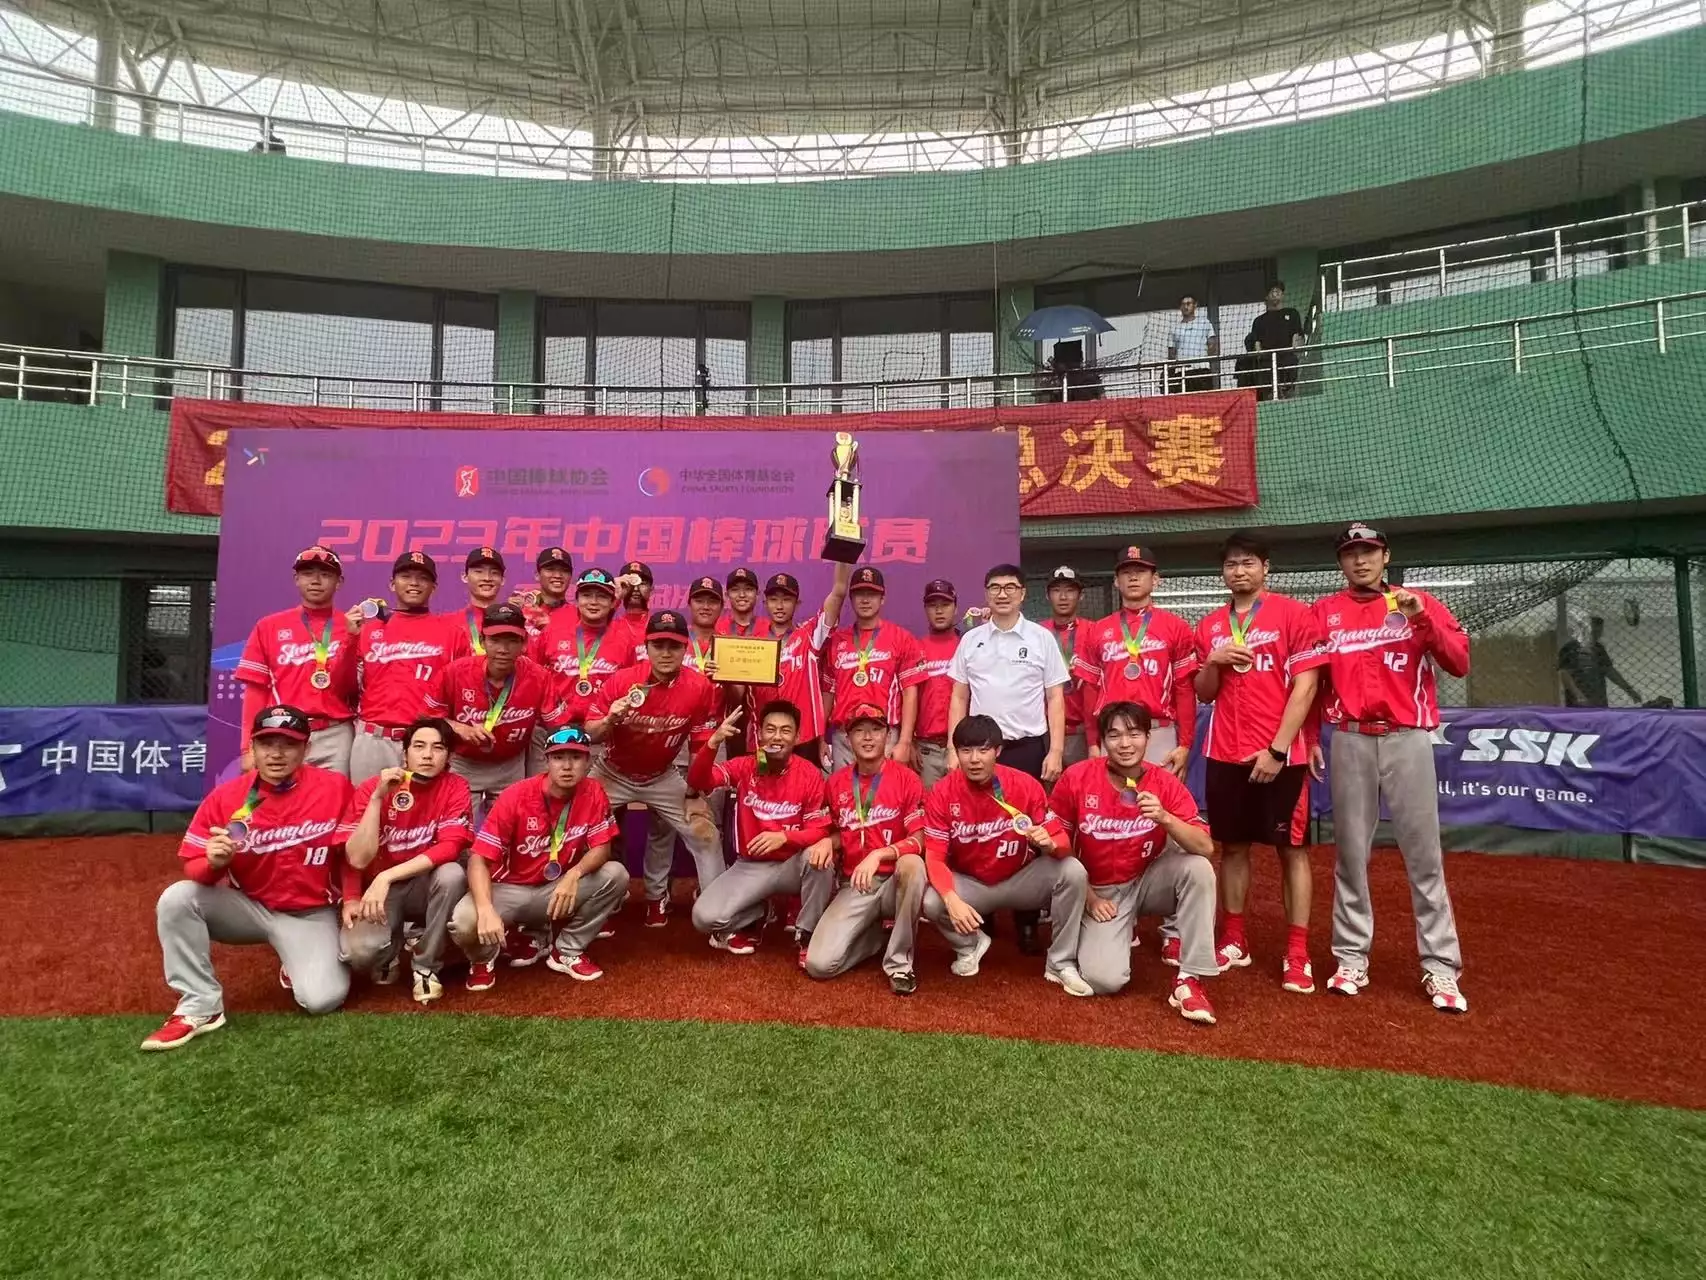 Shanghai Red Eagle Team won the 2023 China Baseball League Championship Broadcasting Article